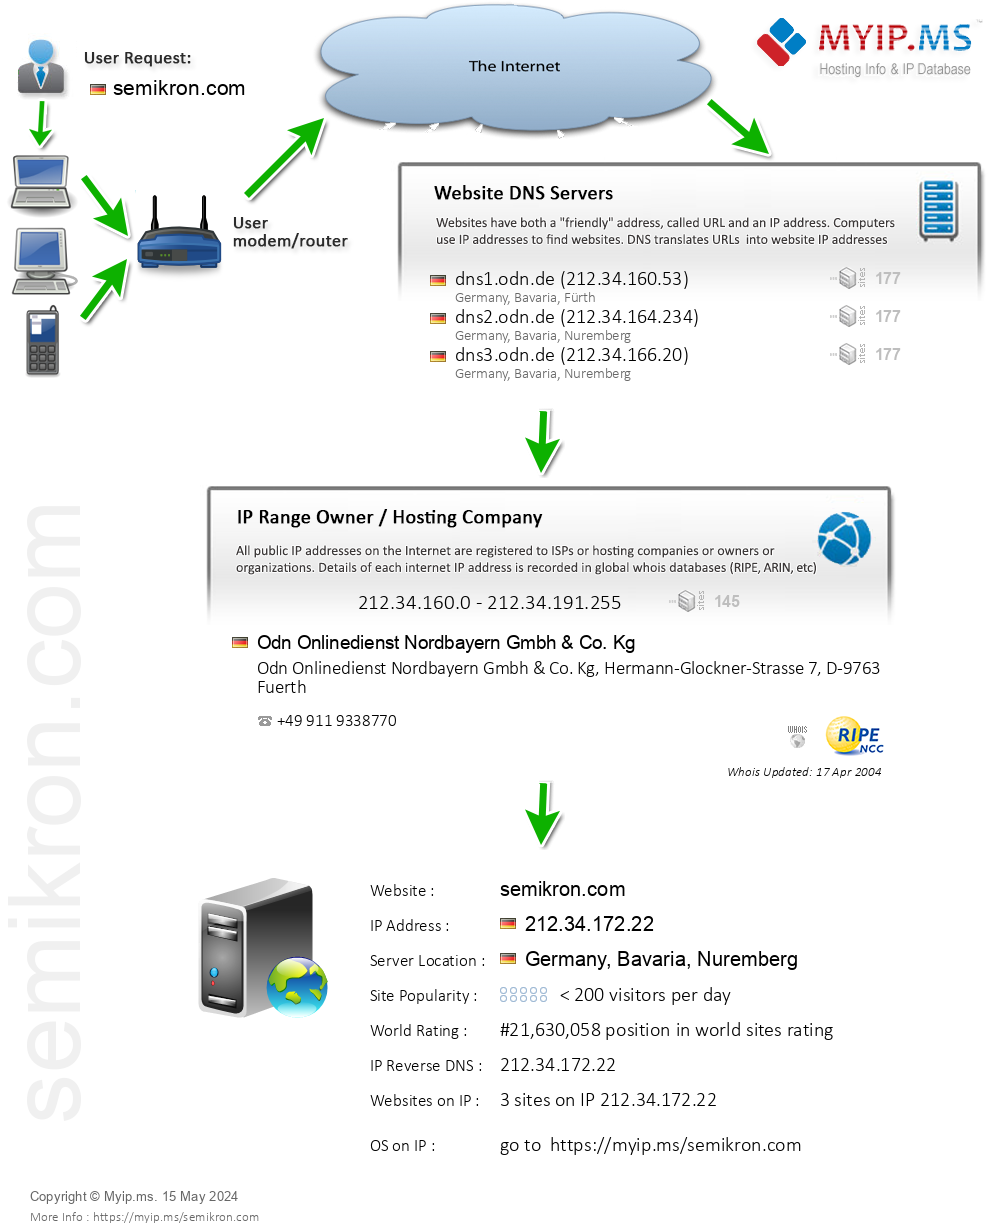 Semikron.com - Website Hosting Visual IP Diagram